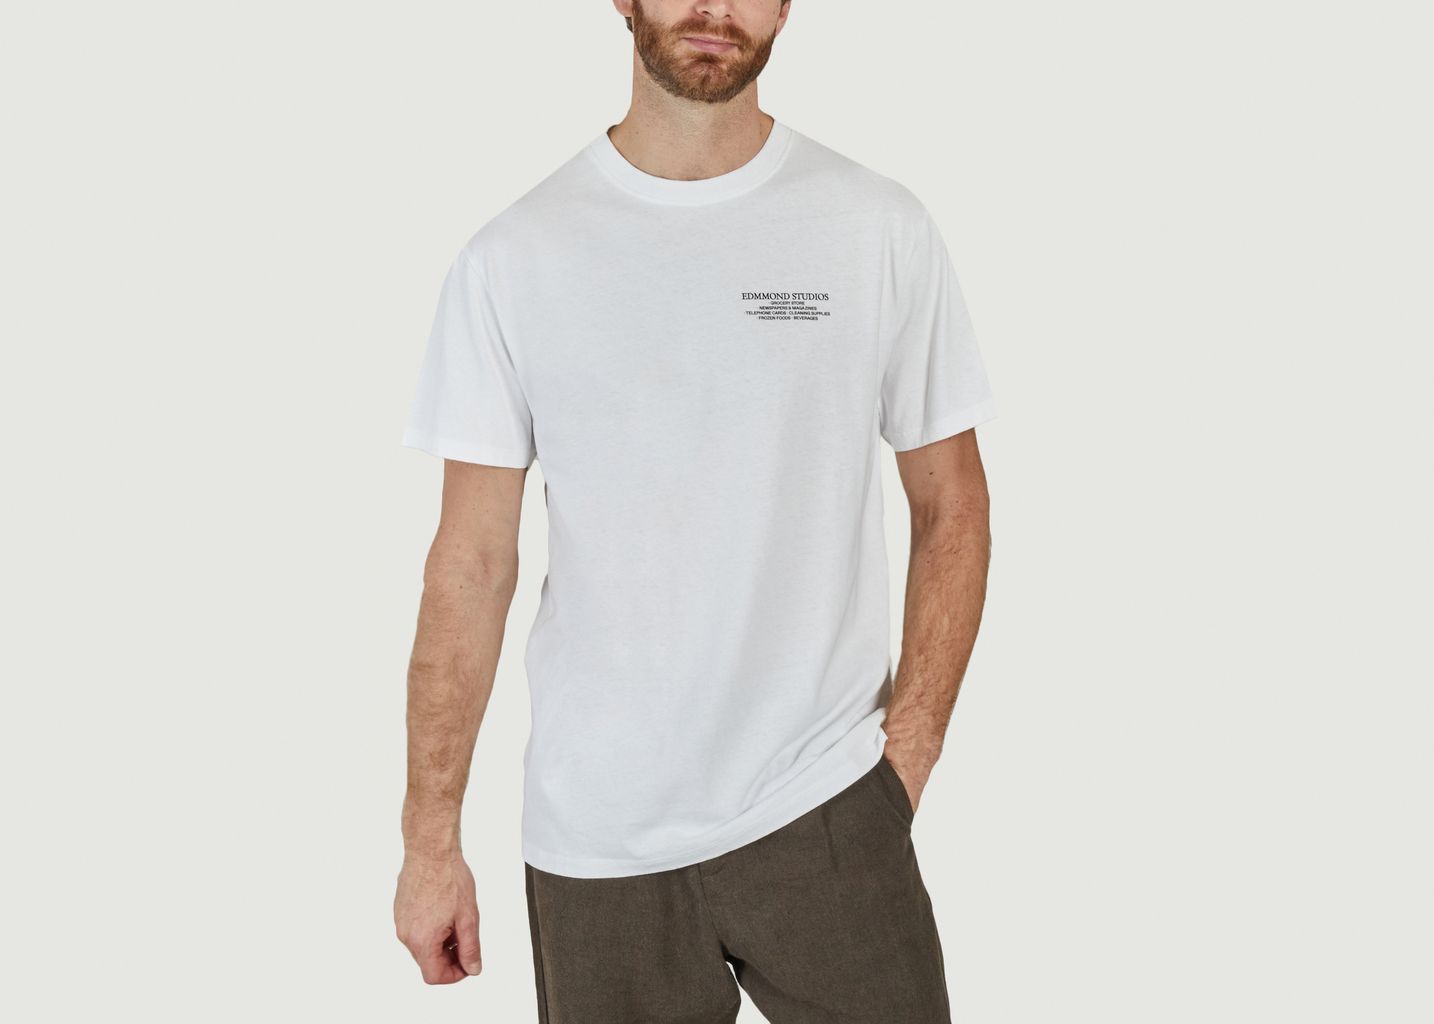 Edmmond Mini Market T-shirt,